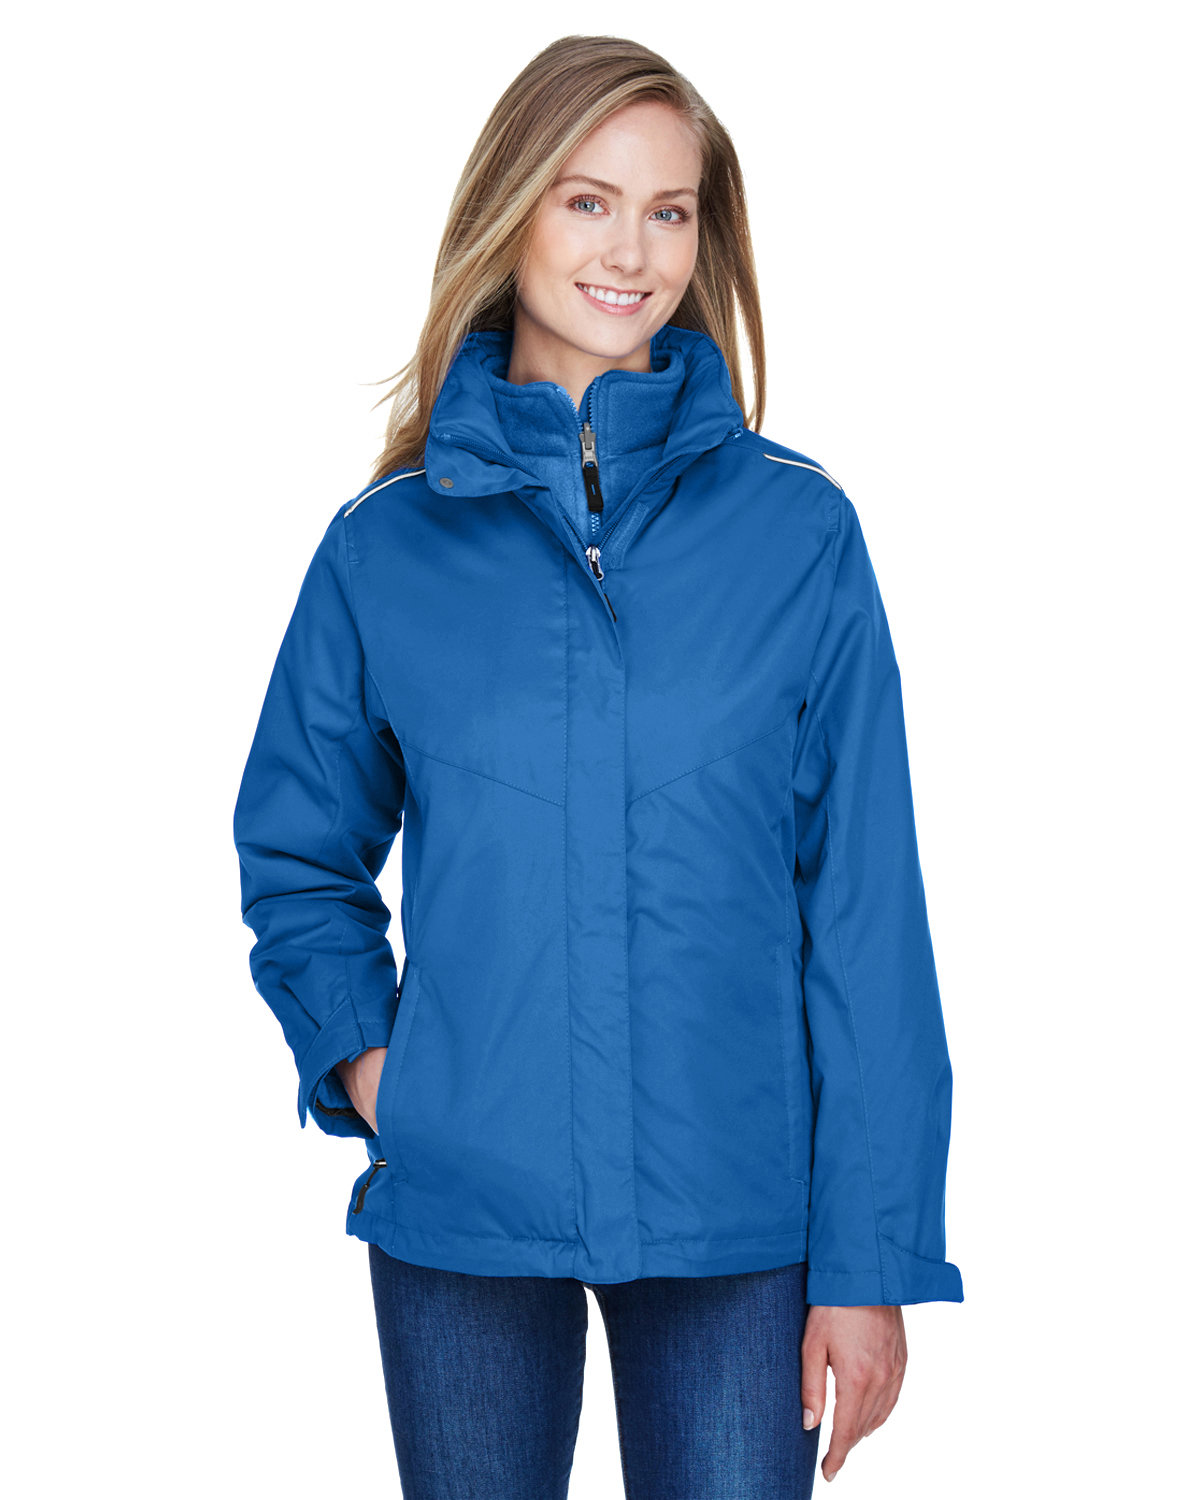 Core 365 Ladies' Region 3-in-1 Jacket with Fleece Liner TRUE ROYAL 